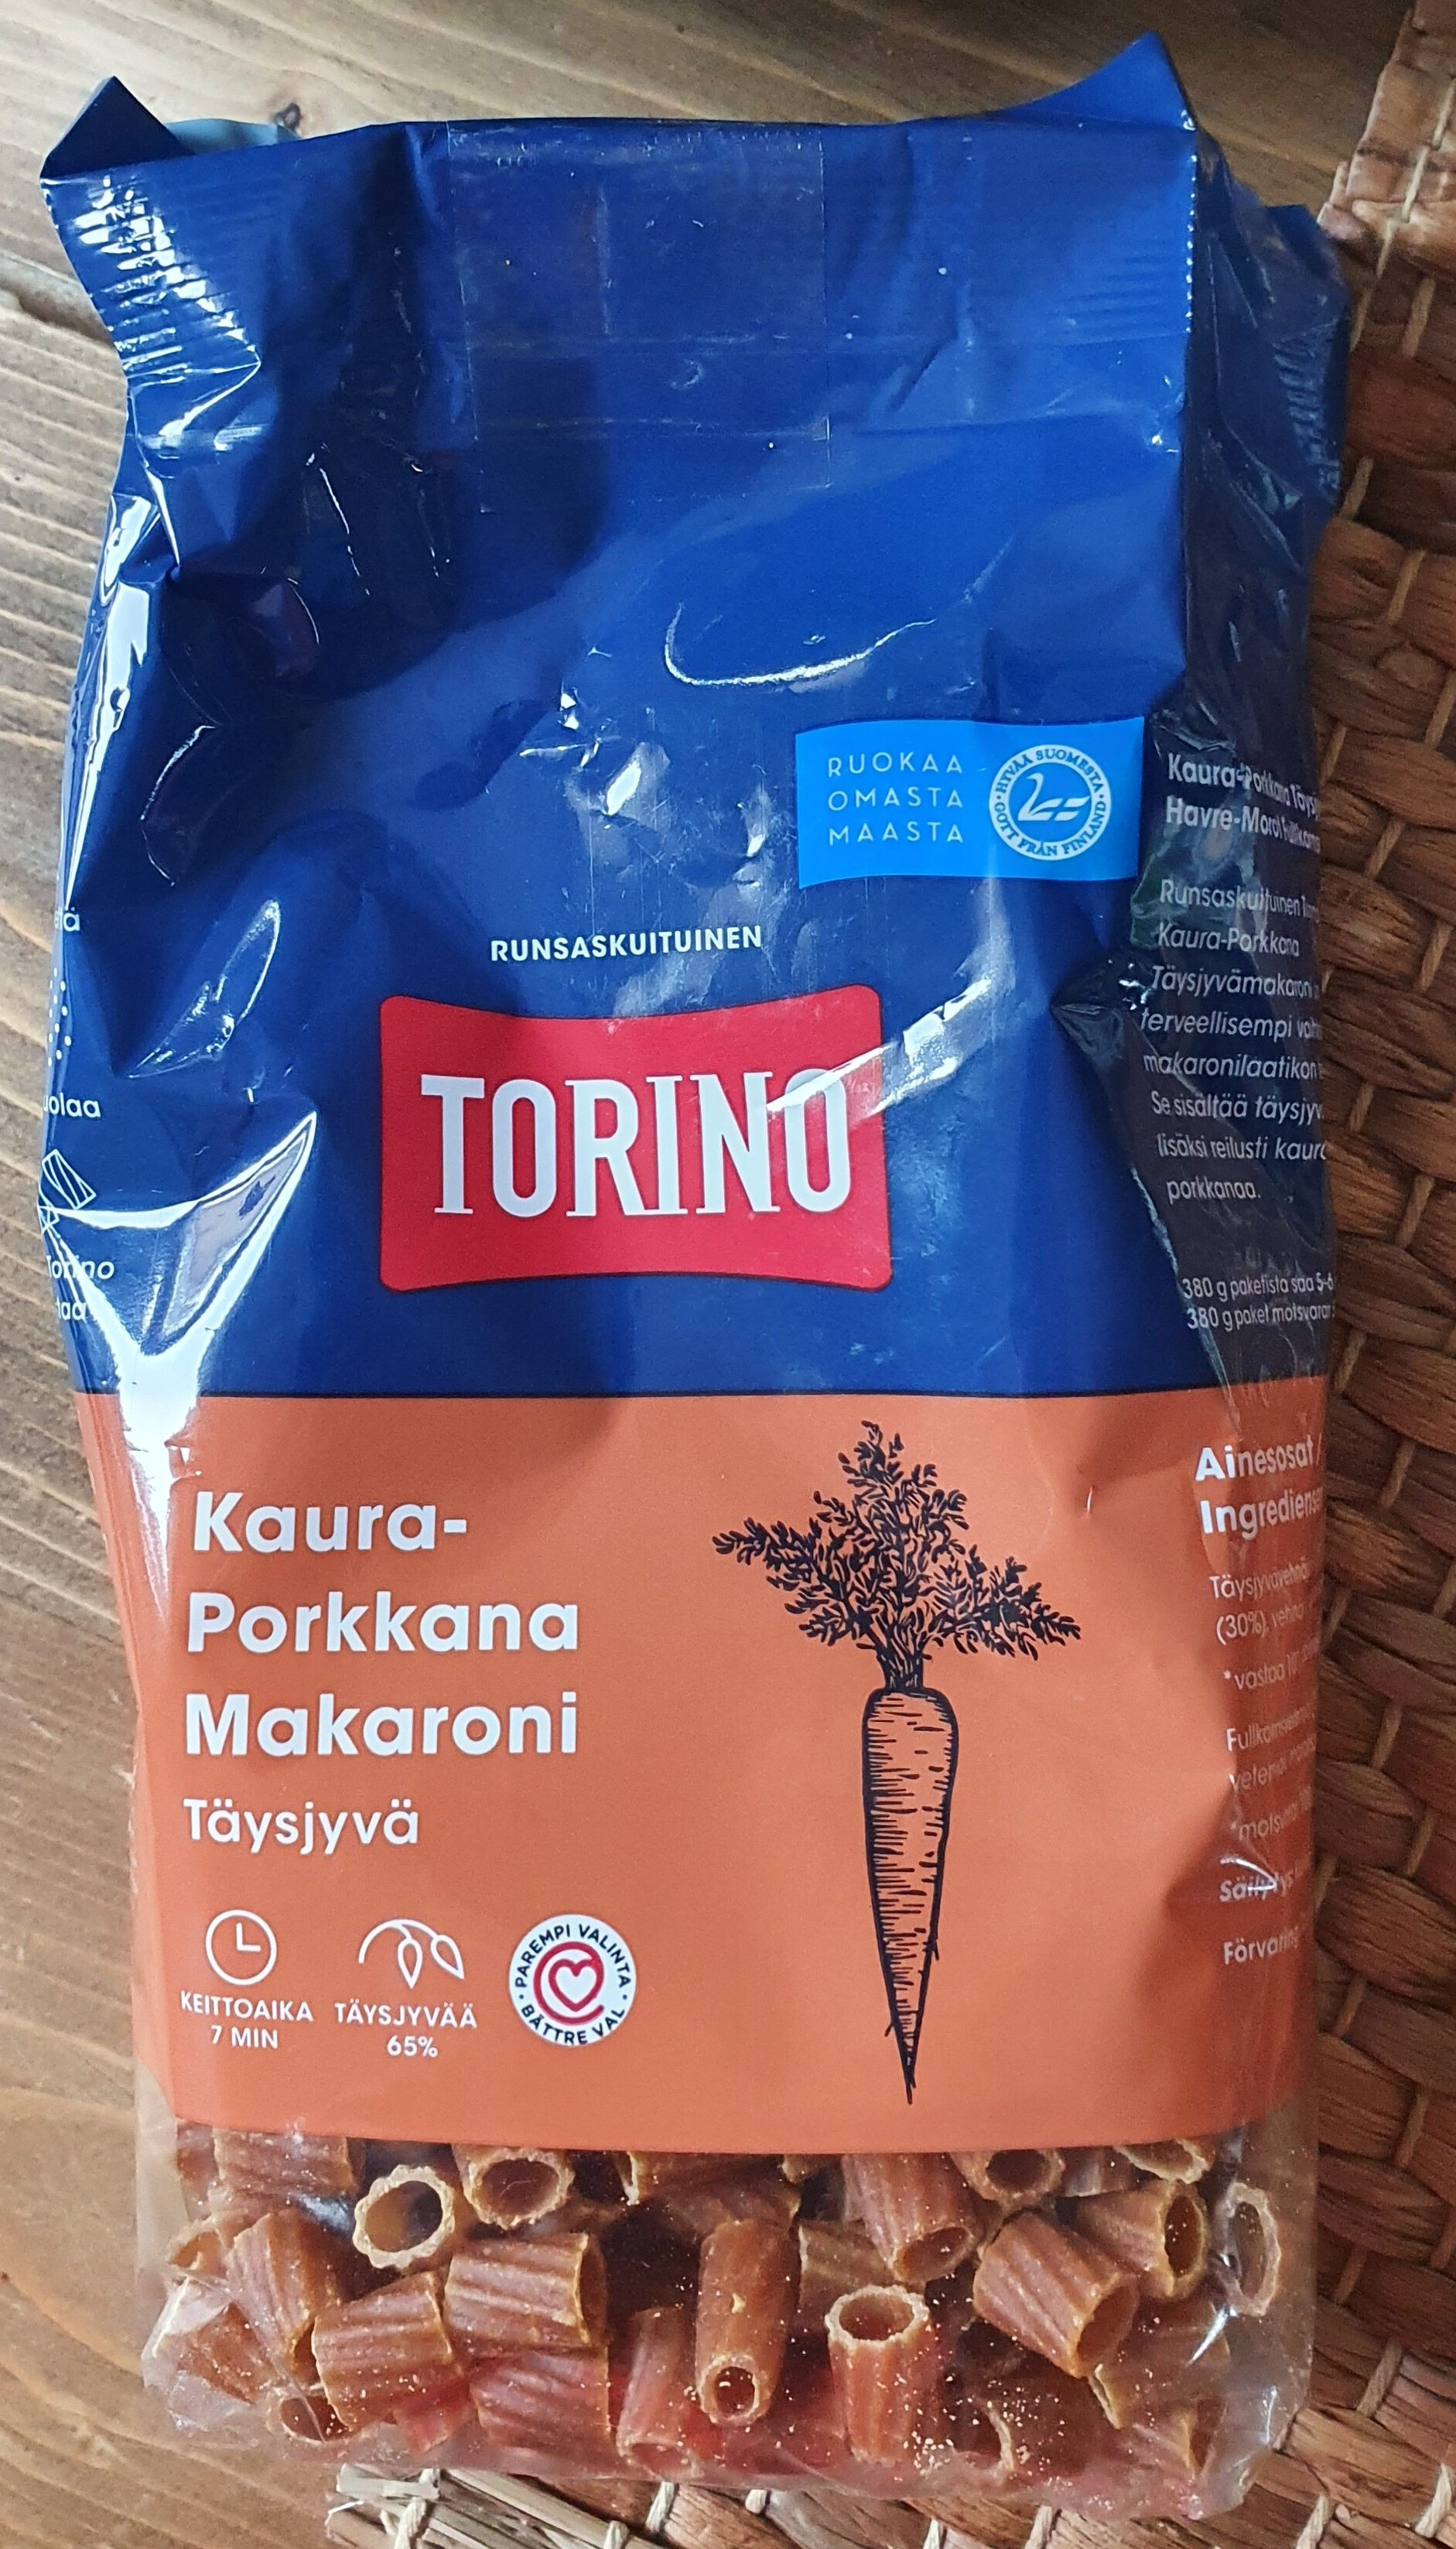 Kaura-porkkana makaroni - Tuote